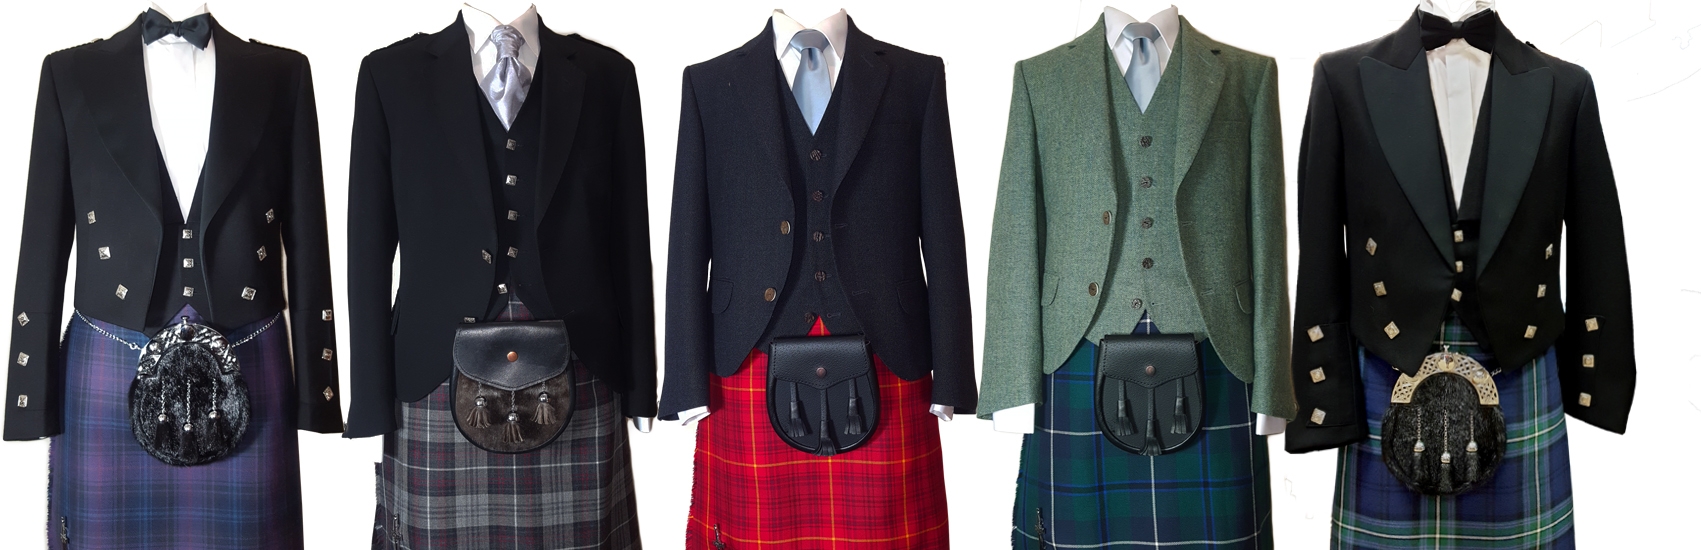 Buckle BRAND NEW Highland Wear Scotland UK PLAIN BLACK KILT 5 Yard All Sizes 